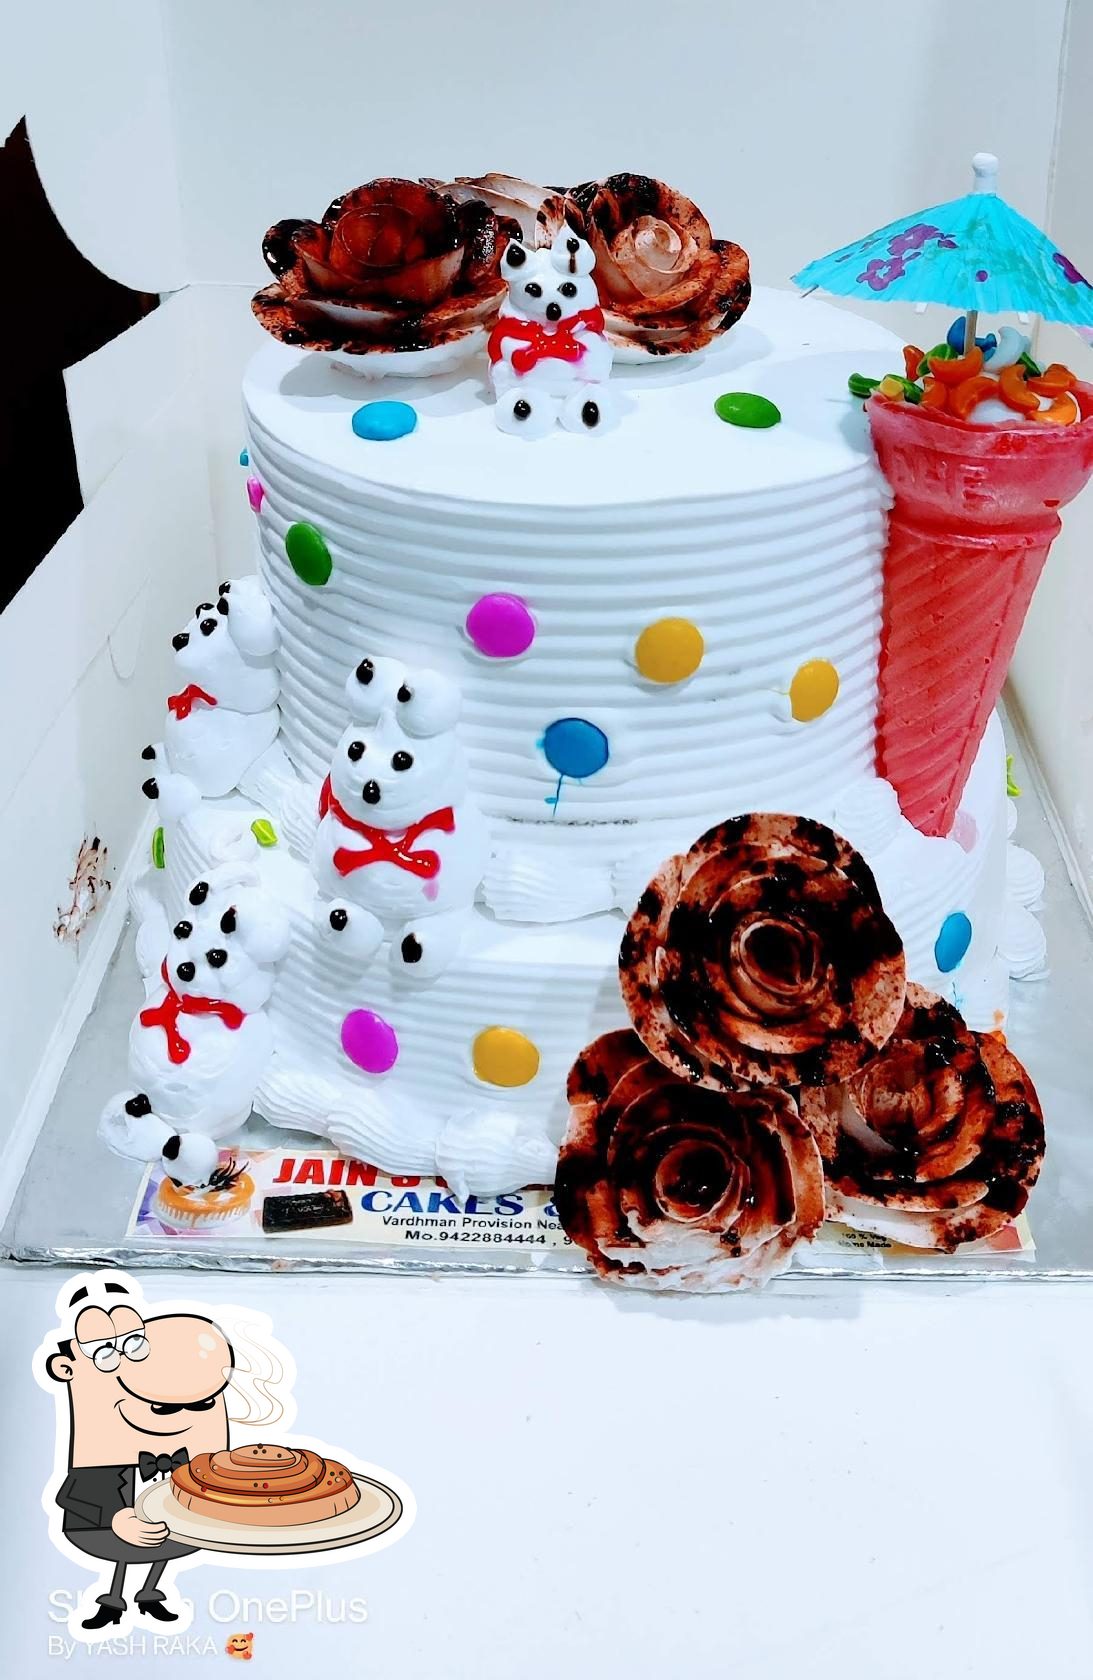 Project 365 – Birthday Cake | Sassy Susan Creates